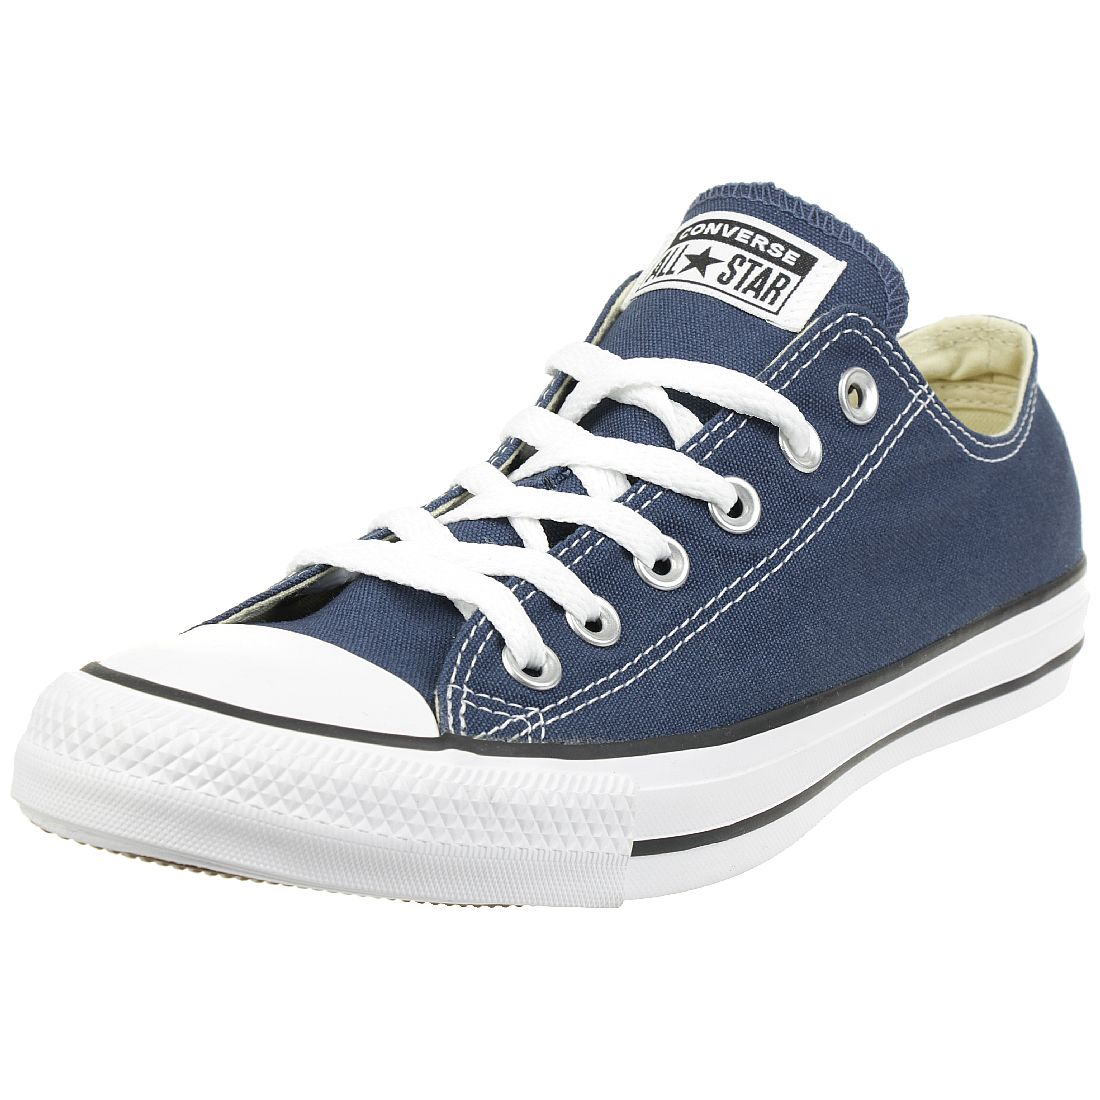 Converse, Sneaker Ctas Core Ox in dunkelblau, Schnürschuhe für Damen